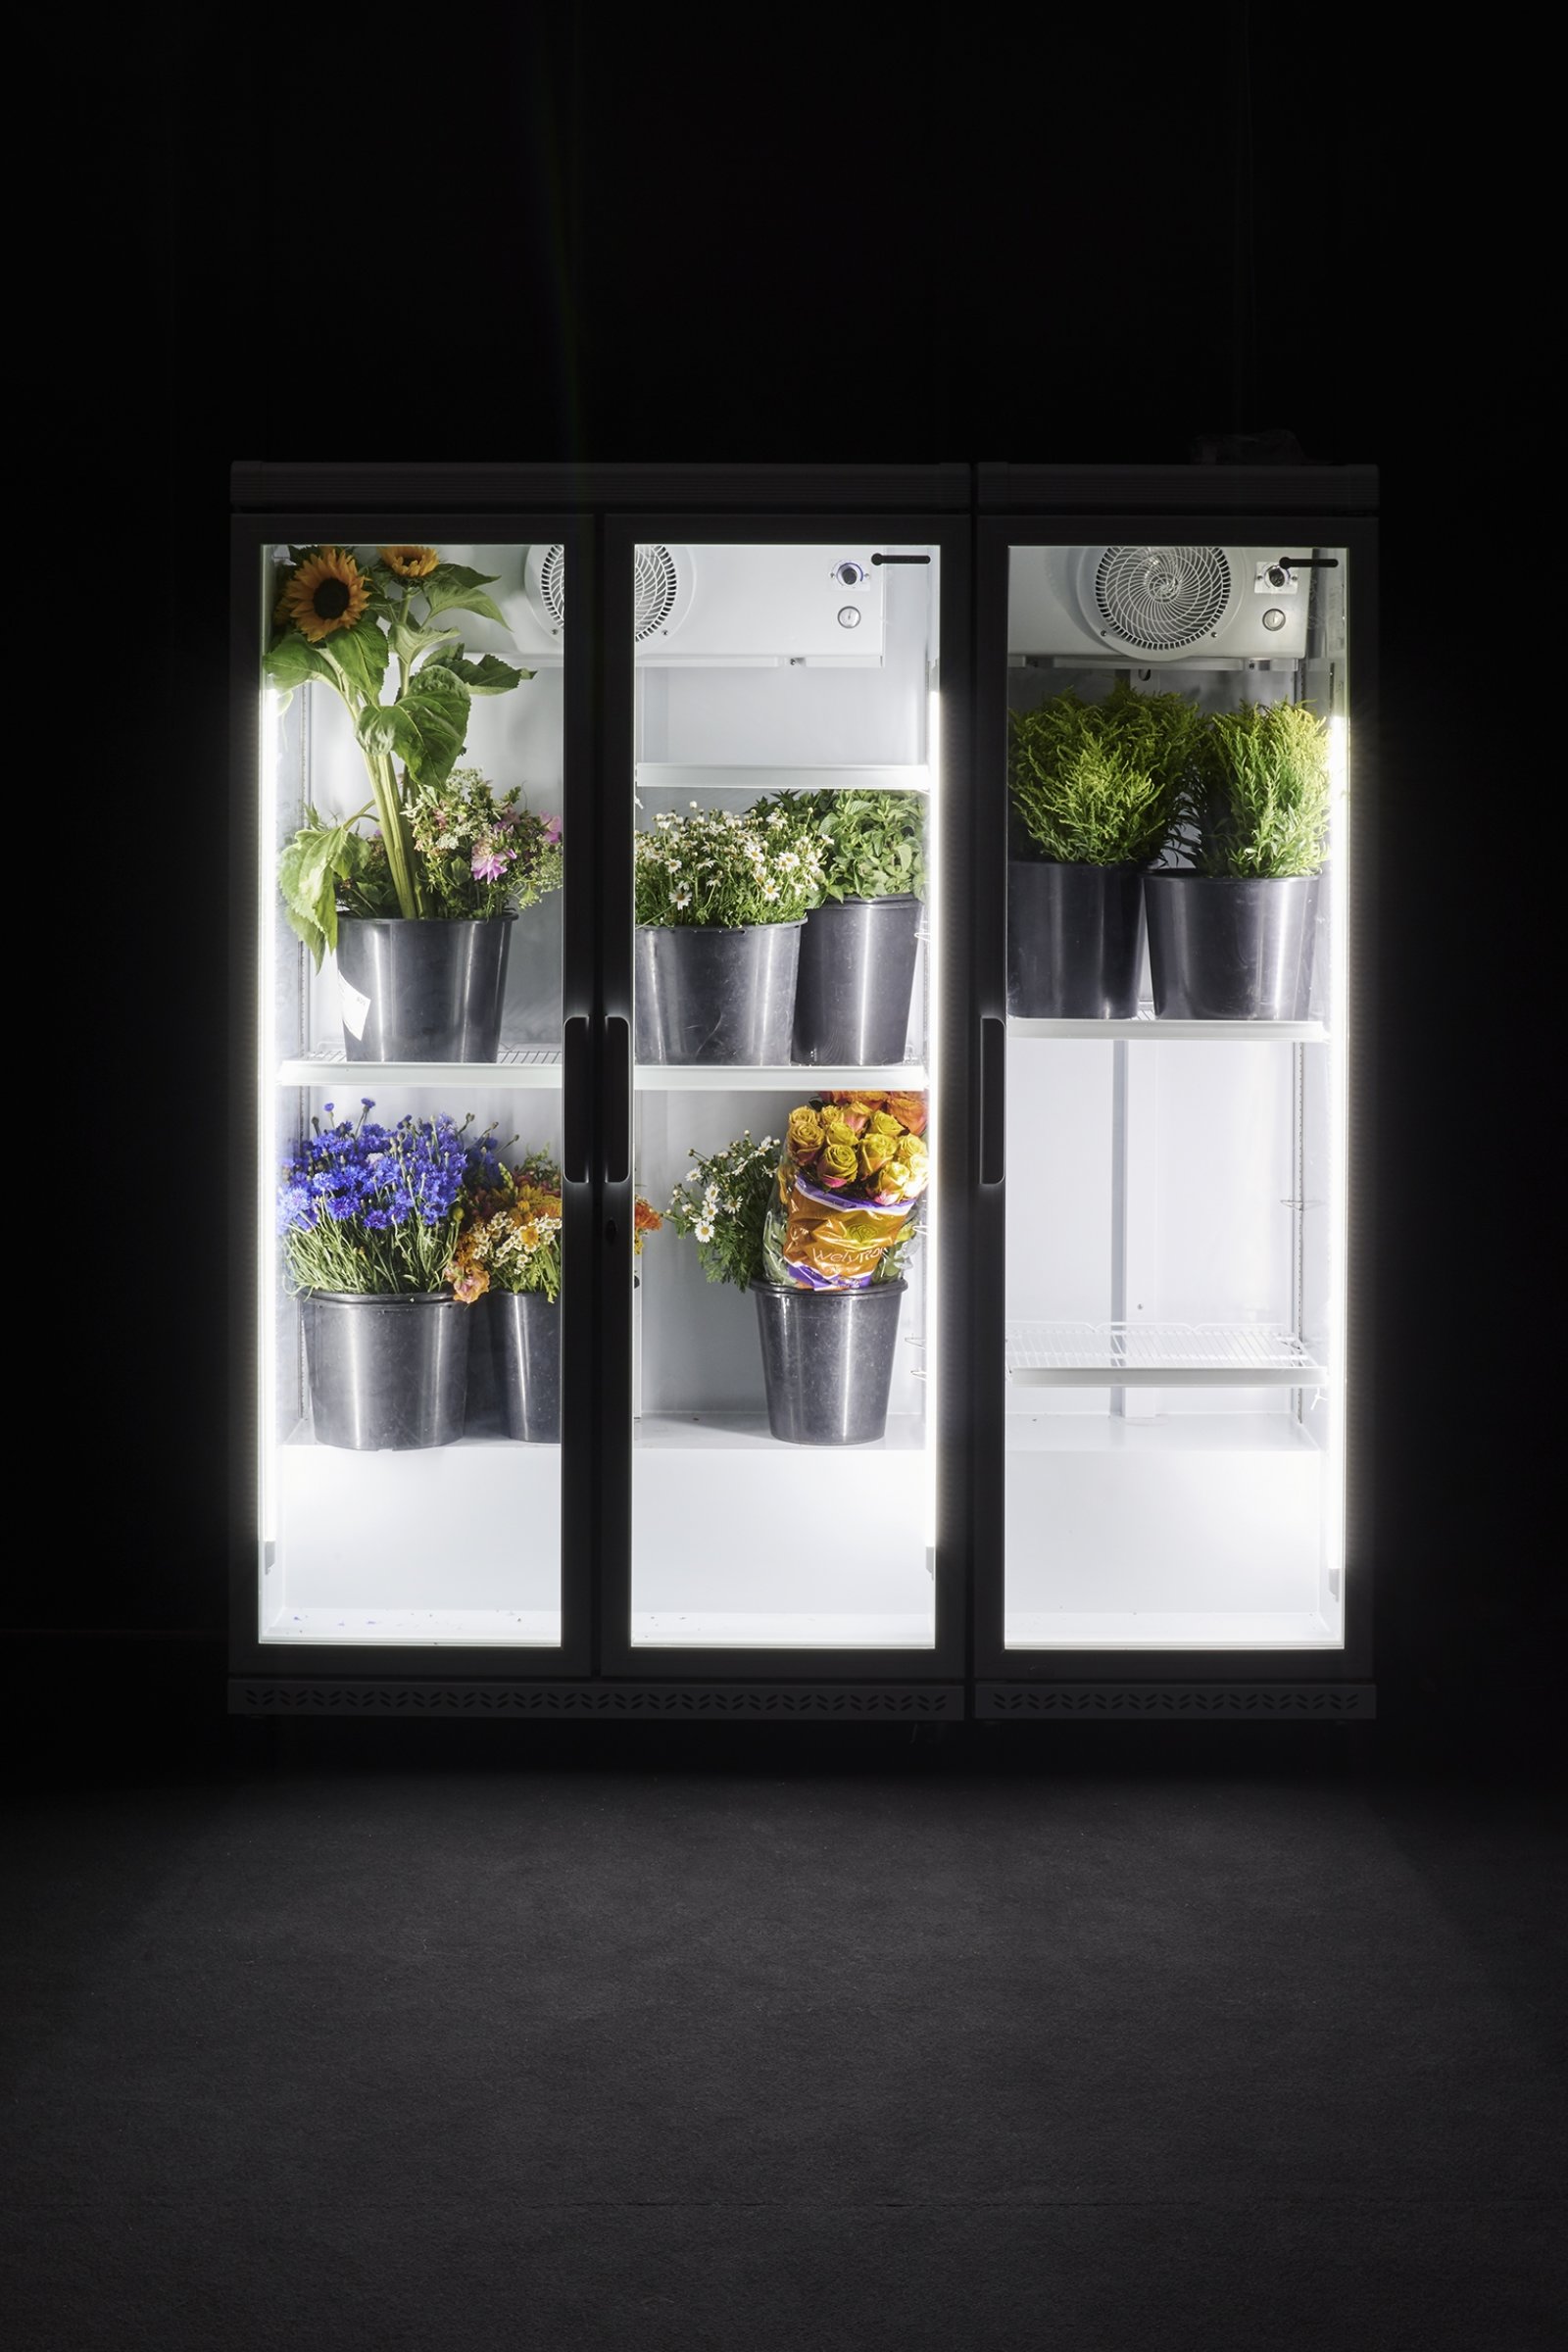 Abbas Akhavan, study for a glasshouse, 2017, refrigerators, flowers, plastic buckets, 79 x 69 x 24 in. (200 x 175 x 60 cm). Installation view, Museum Villa Stuck, Munich, Germany, 2017
 